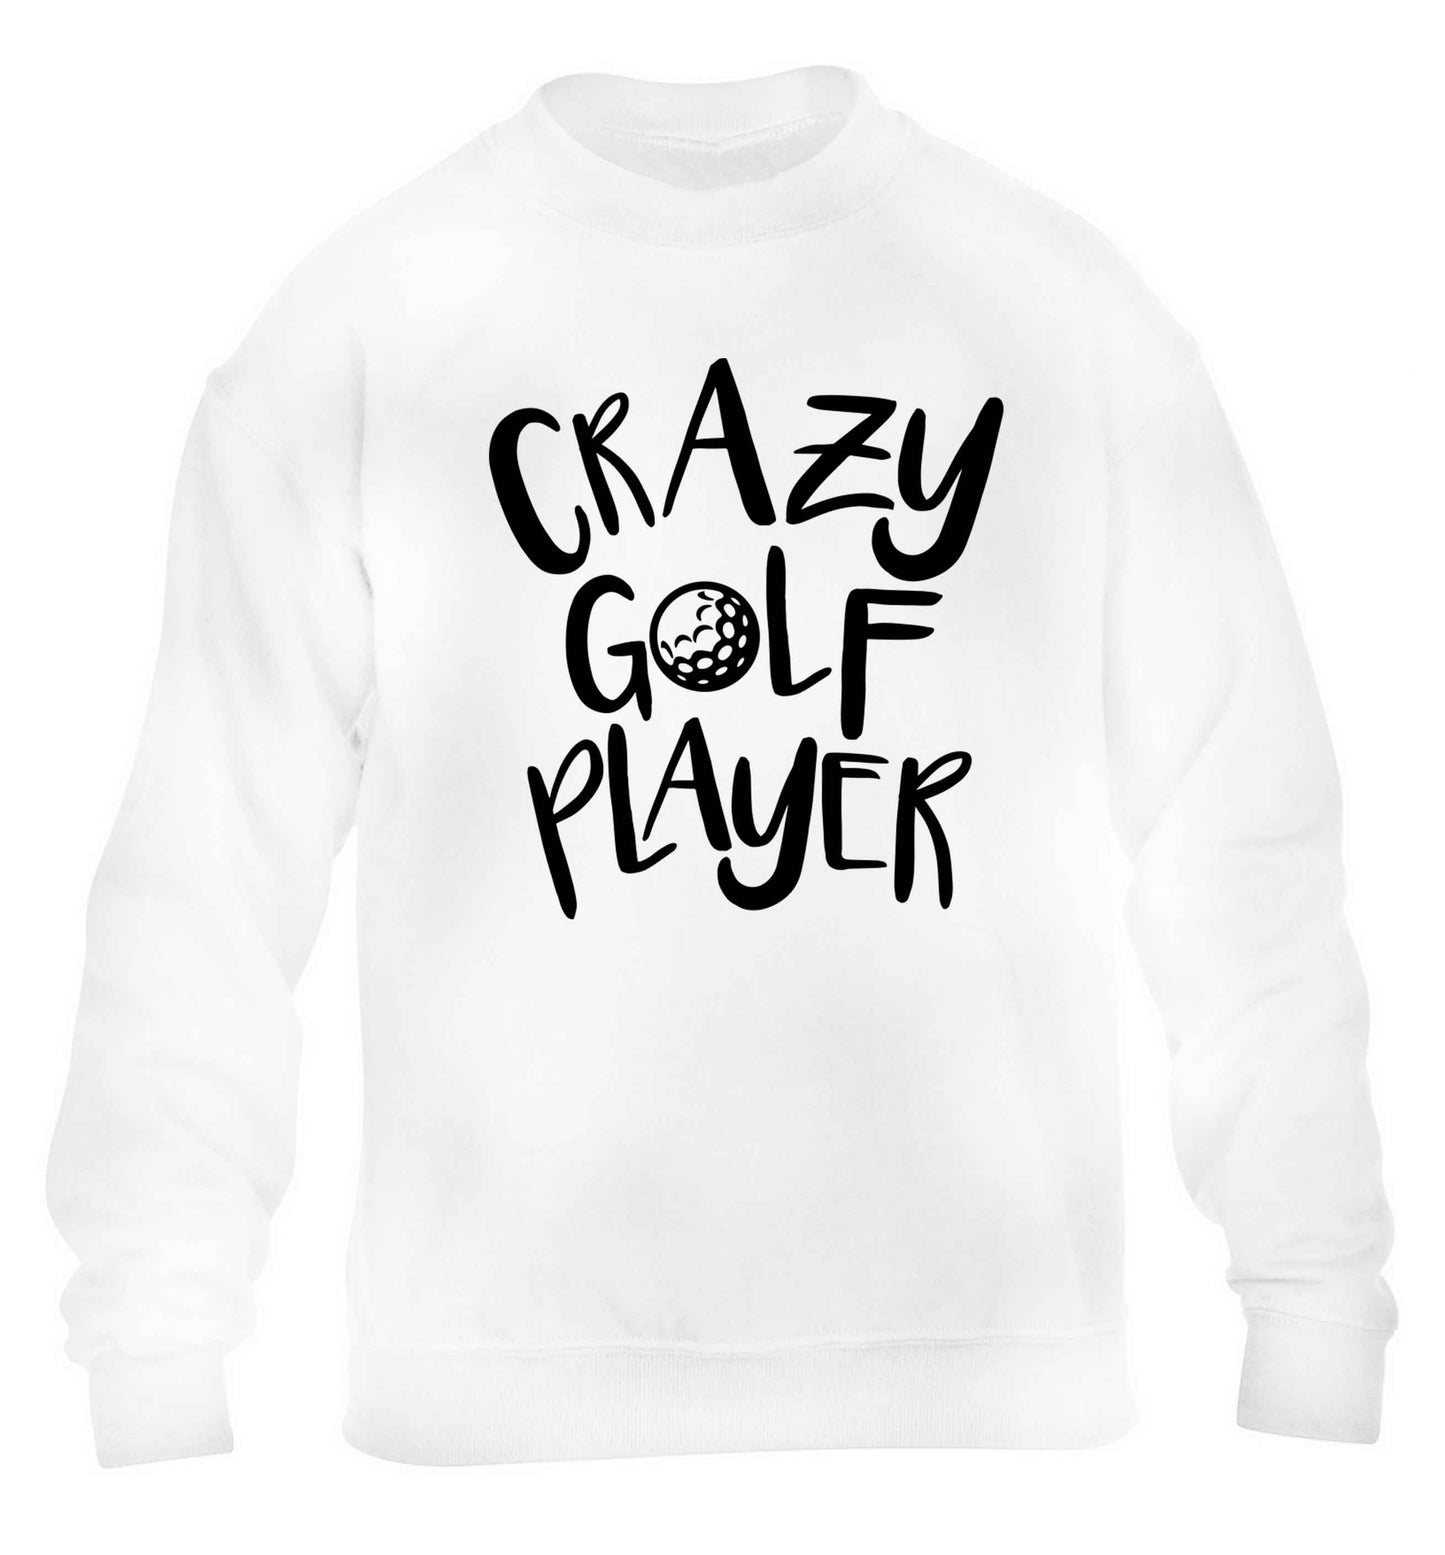 Crazy golf player children's white sweater 12-13 Years